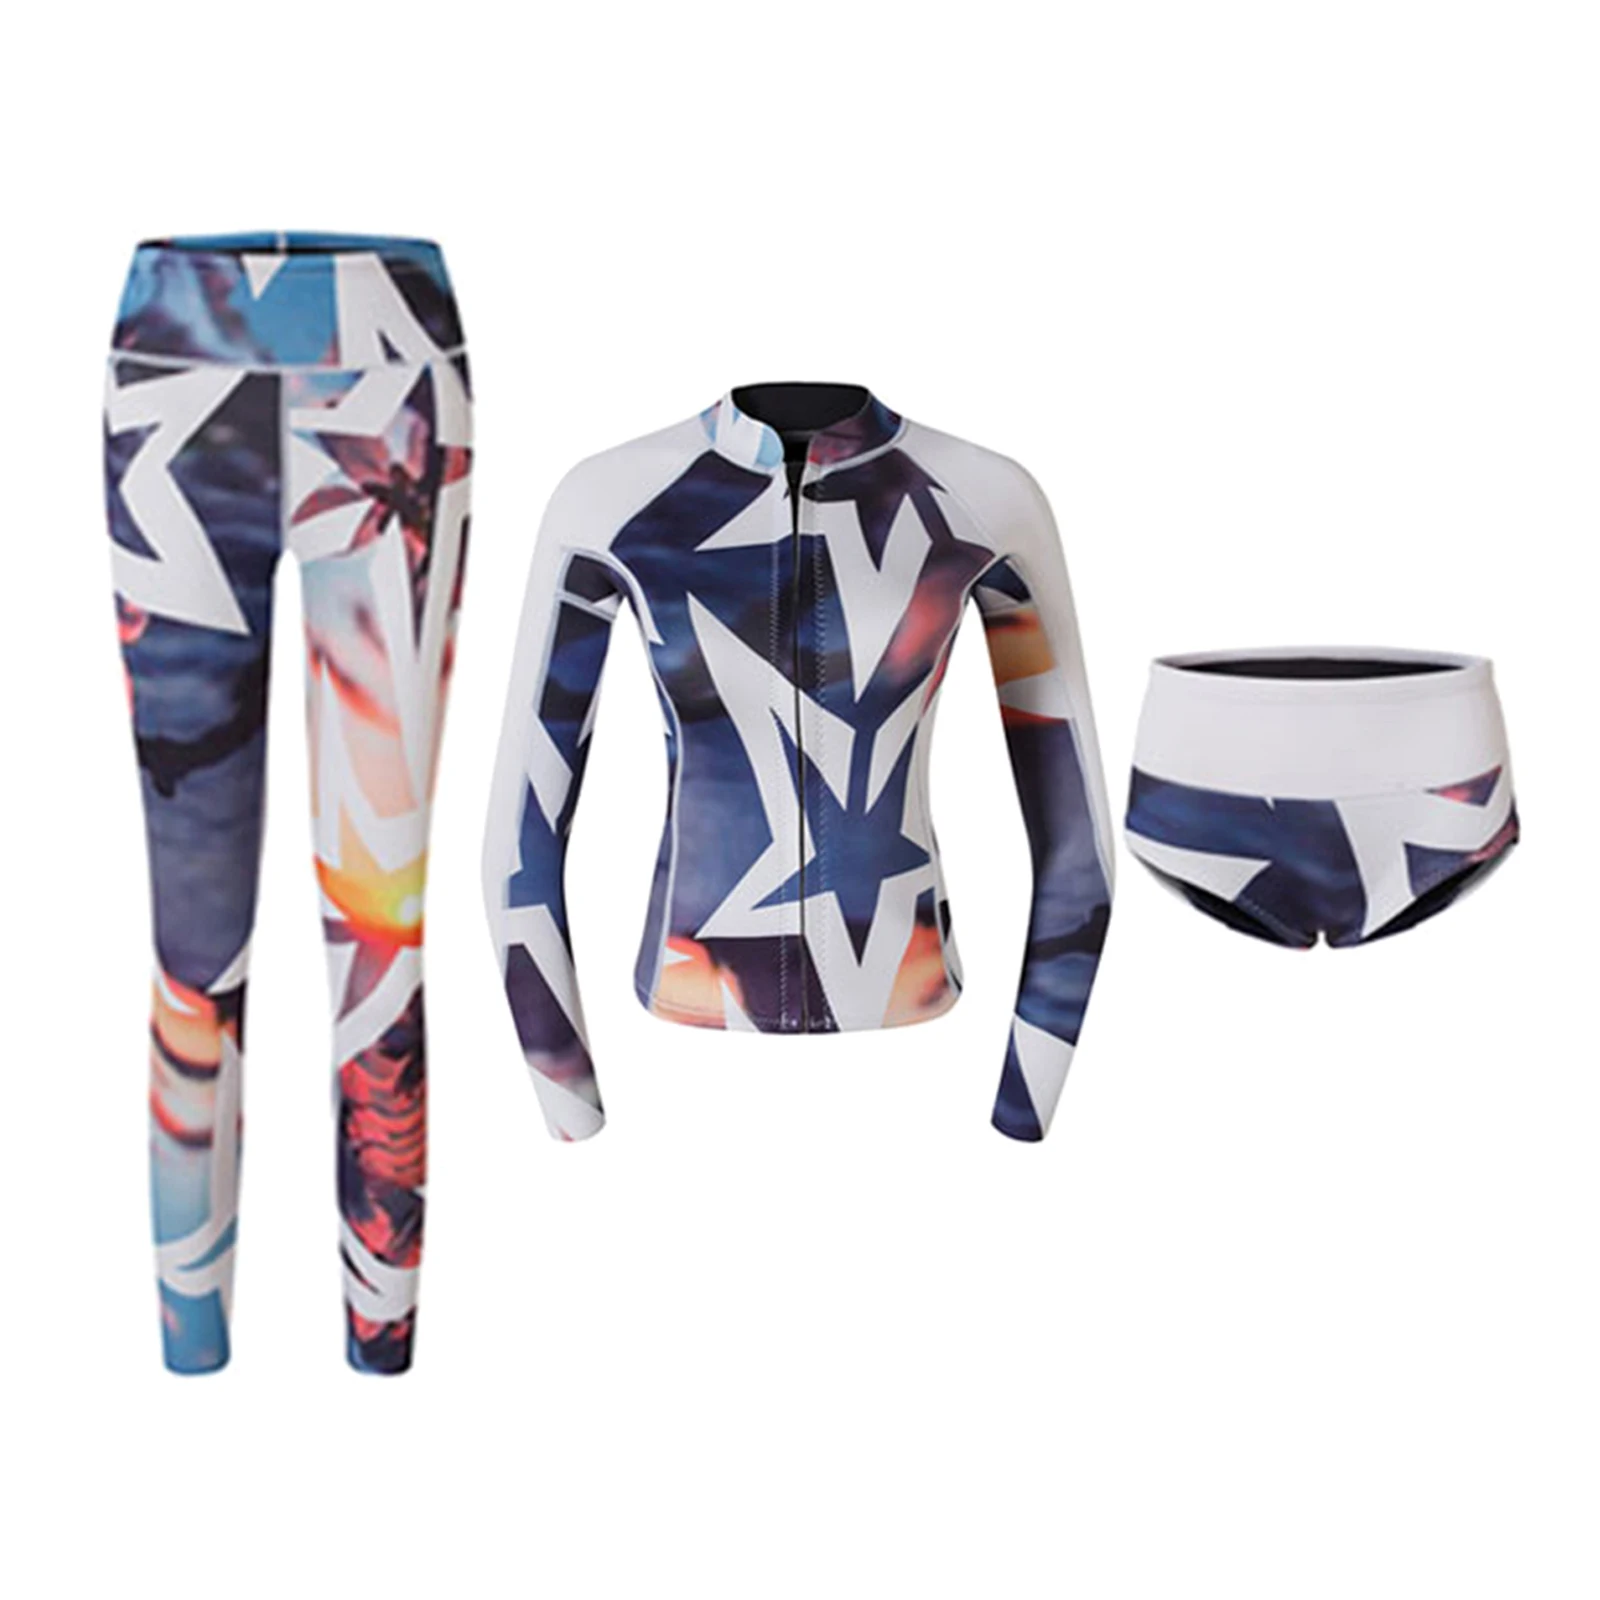 3pcs Women Wetsuit UPF50+ Long Sleeve Diving Beach Suit Front Zipper Shorts